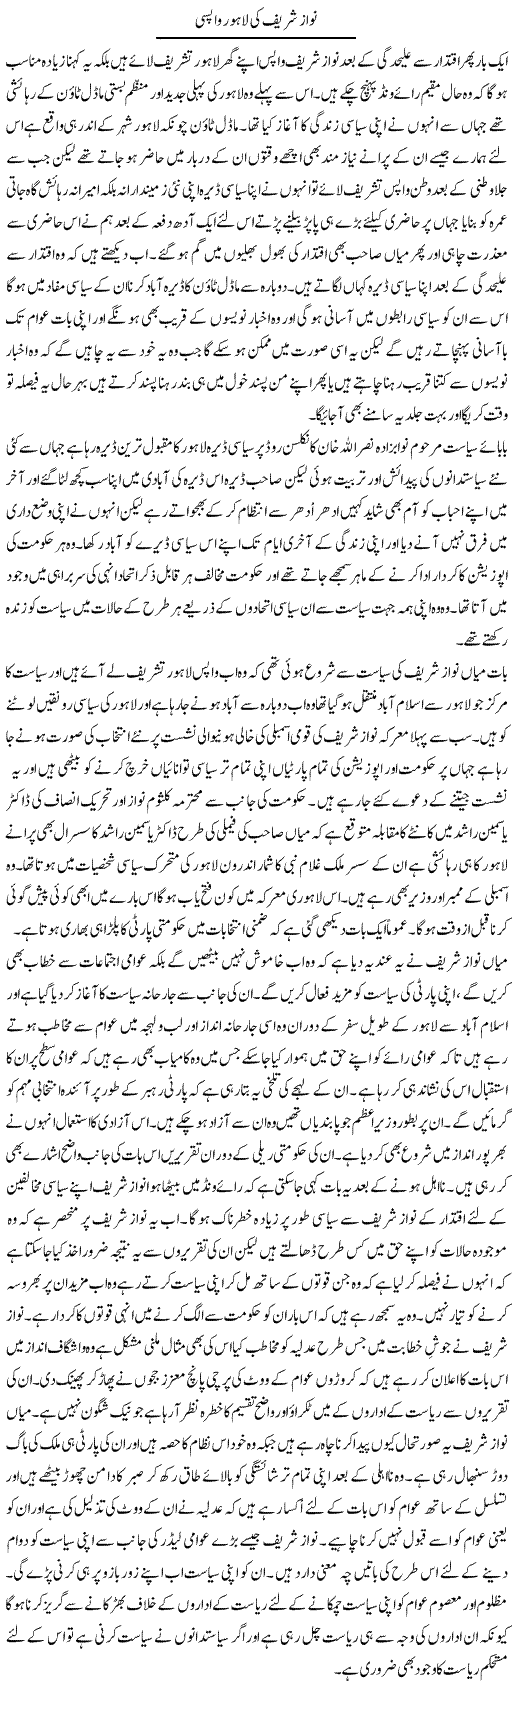 Nawaz Sharif Ki Lahore Wapsi | Abdul Qadir Hassan | Daily Urdu Columns